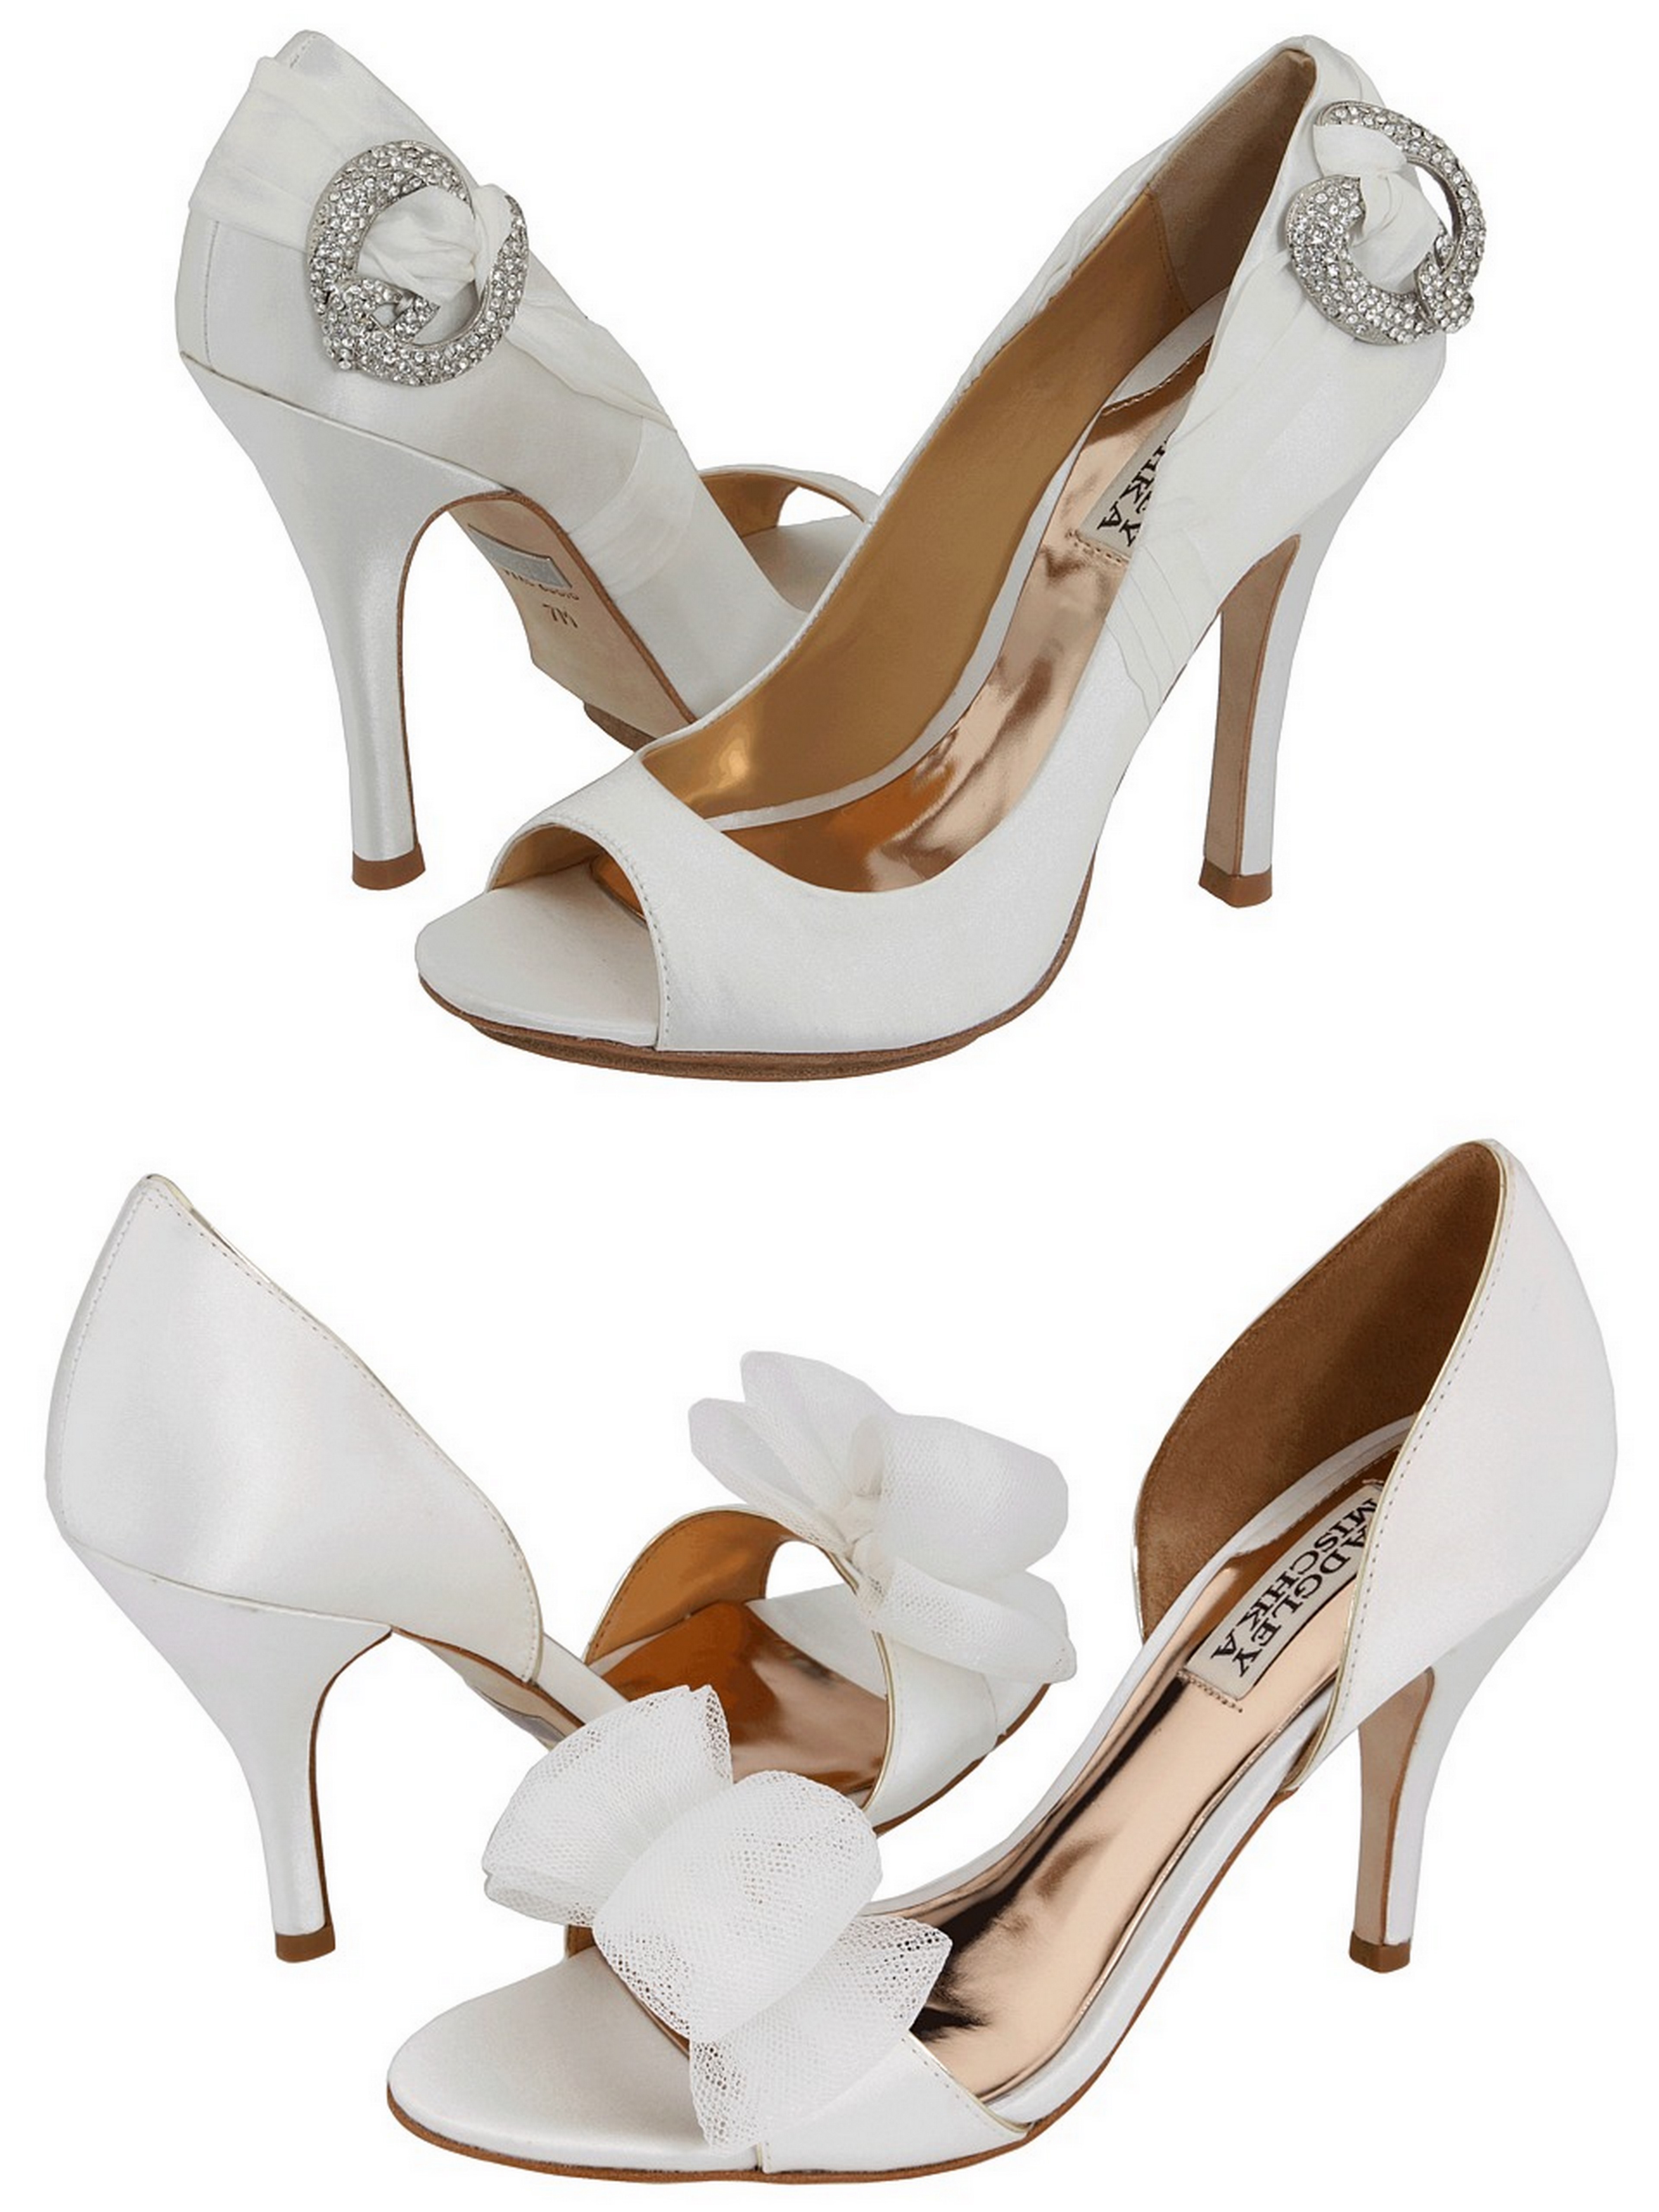 kate spade gracious bridal shoes